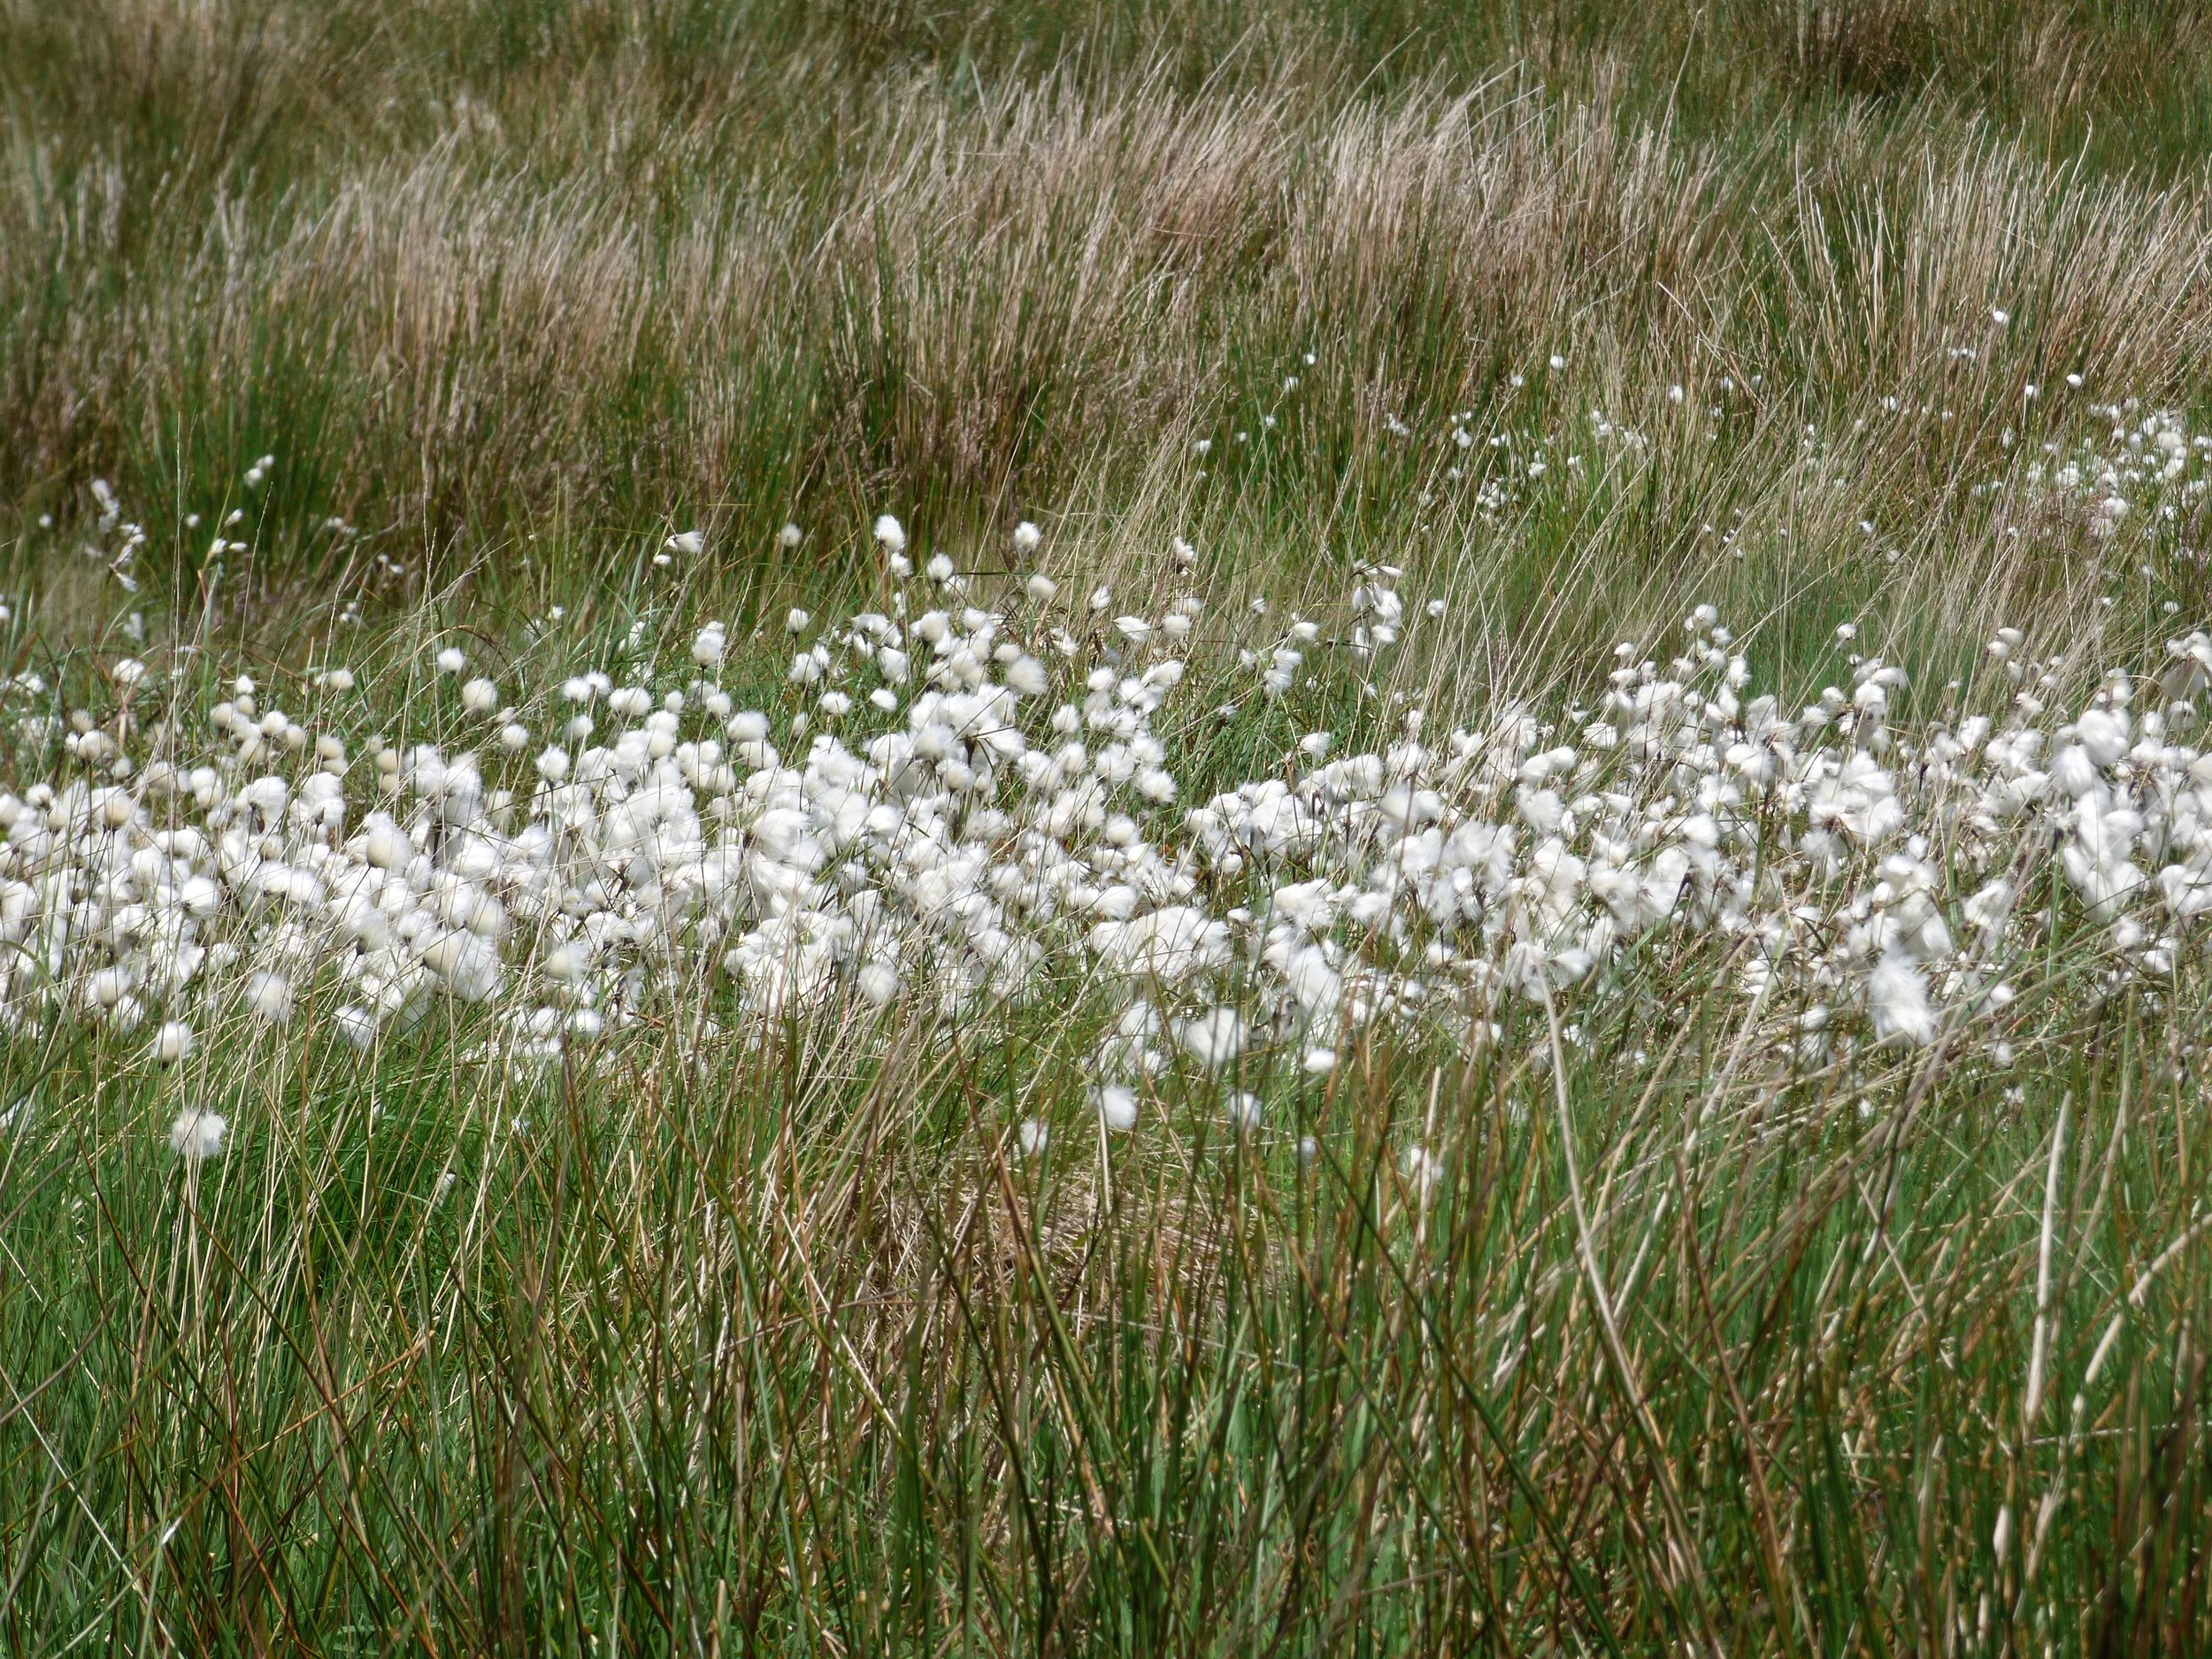 Bog cotton on Walshaw Moor